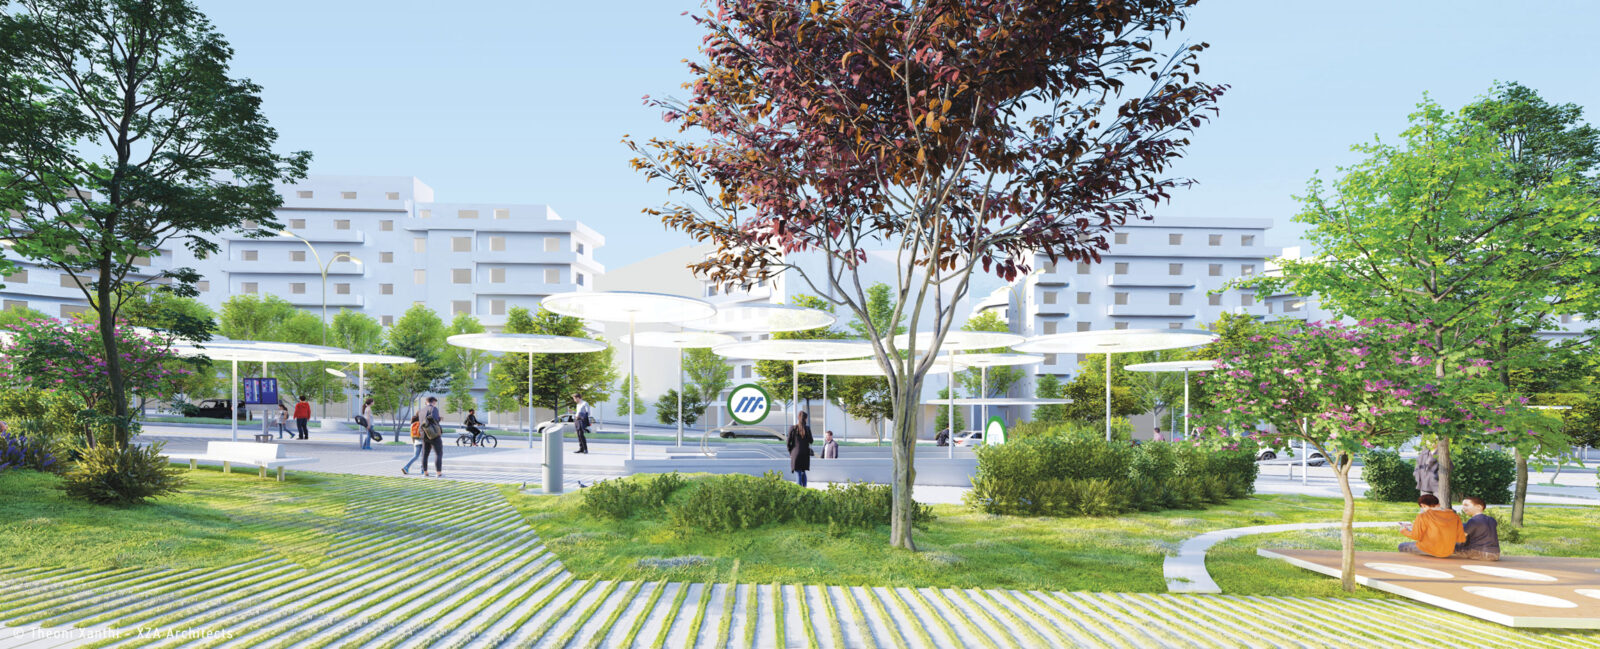 Archisearch Α' Βραβείο στον Αρχιτεκτονικό Διαγωνισμό Ιδεών για την ανάπλαση του κοινόχρηστου χώρου και της ευρύτερης περιοχής του Νέου Σταθμού Μετρό Αλεξάνδρας | Theoni Xanthi – XZA Architects